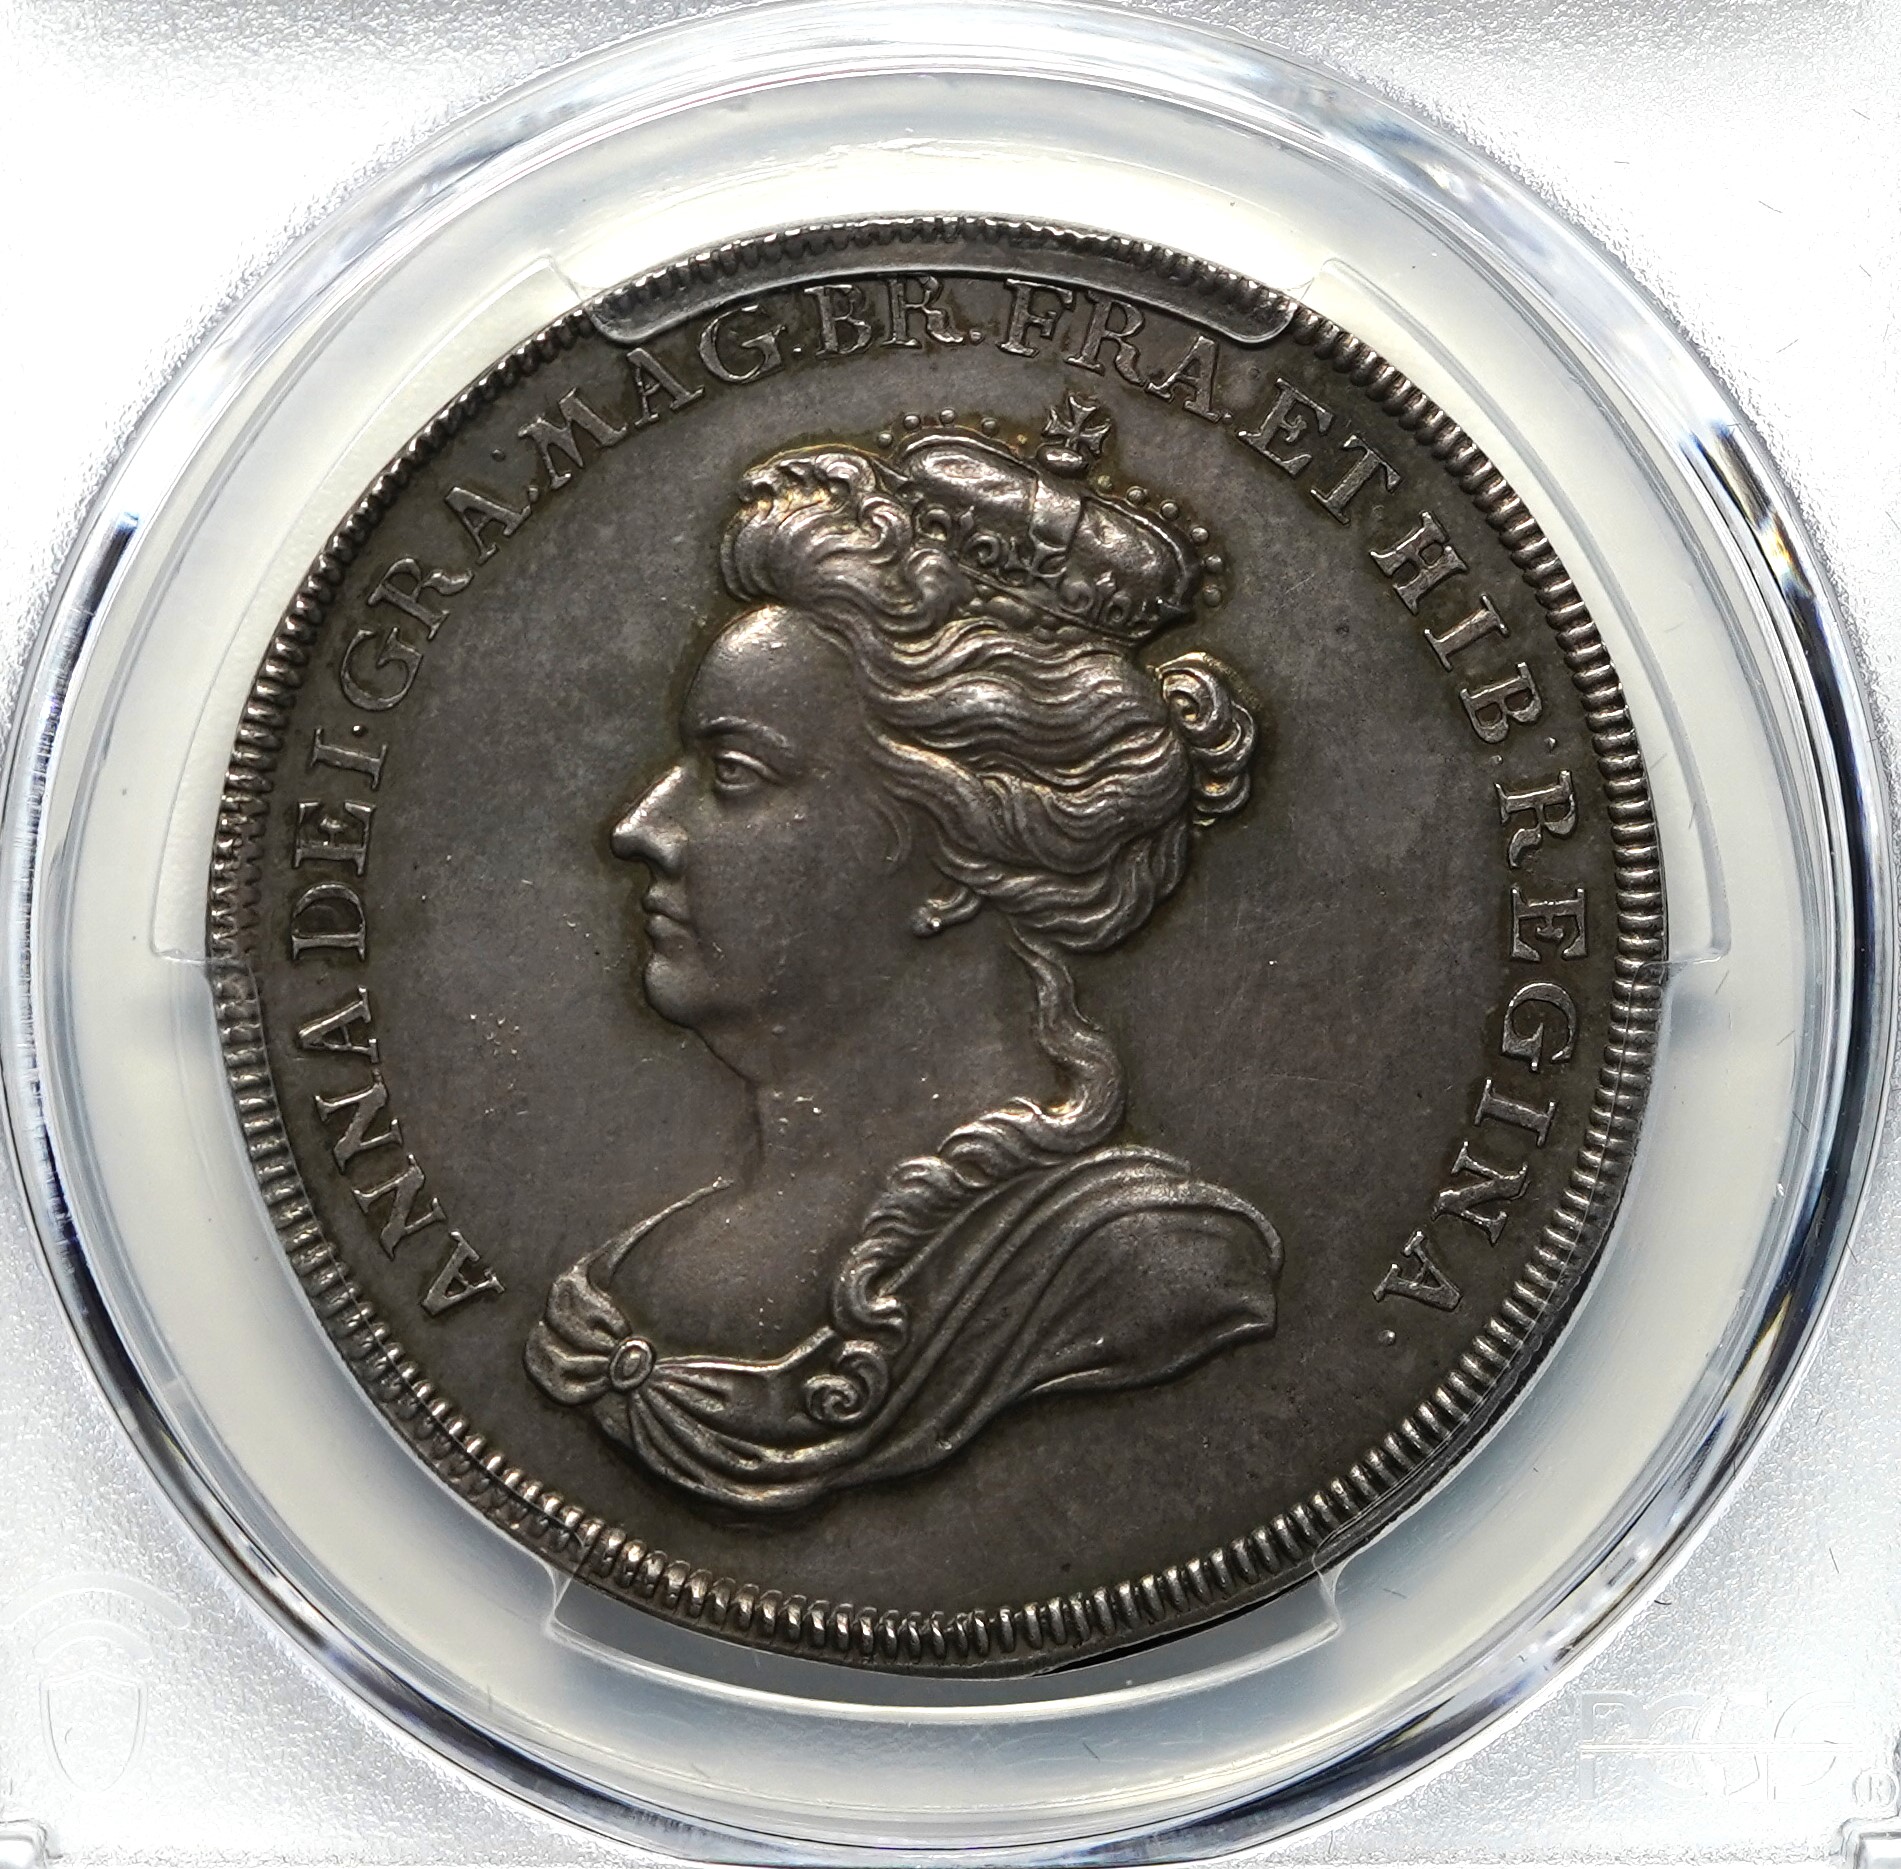 Sold】【最高鑑定】1702年 アン女王 ムーズの降伏記念 銀メダル MS63 